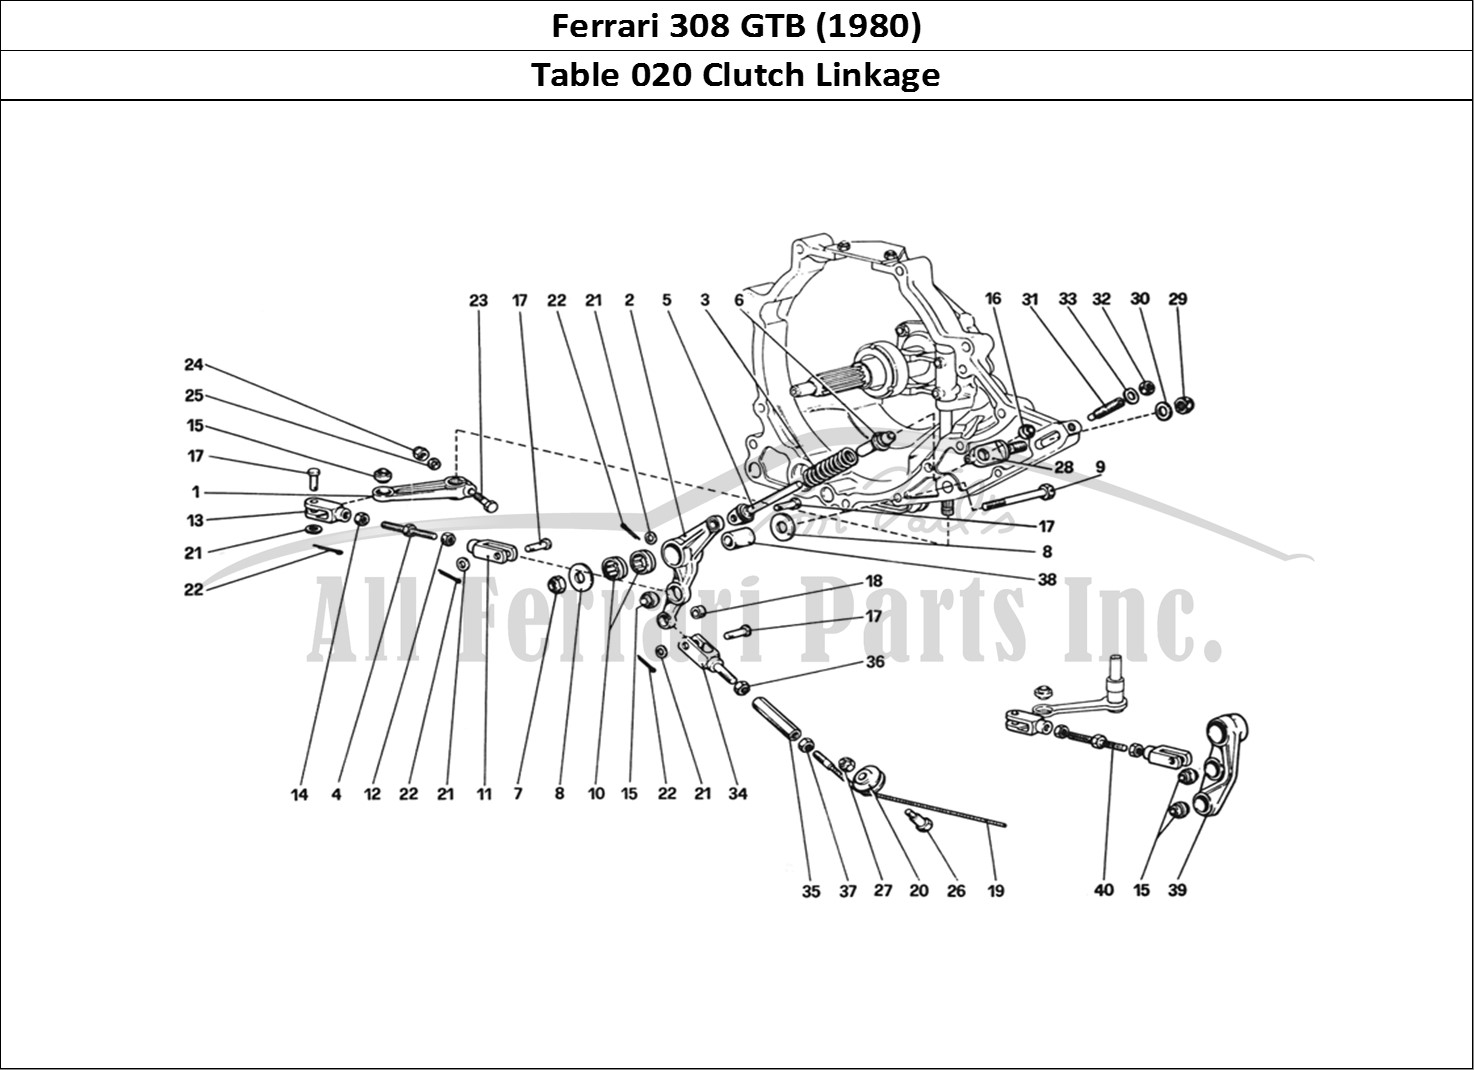 Ferrari Parts Ferrari 308 GTB (1980) Page 020 Clutch Operating Control